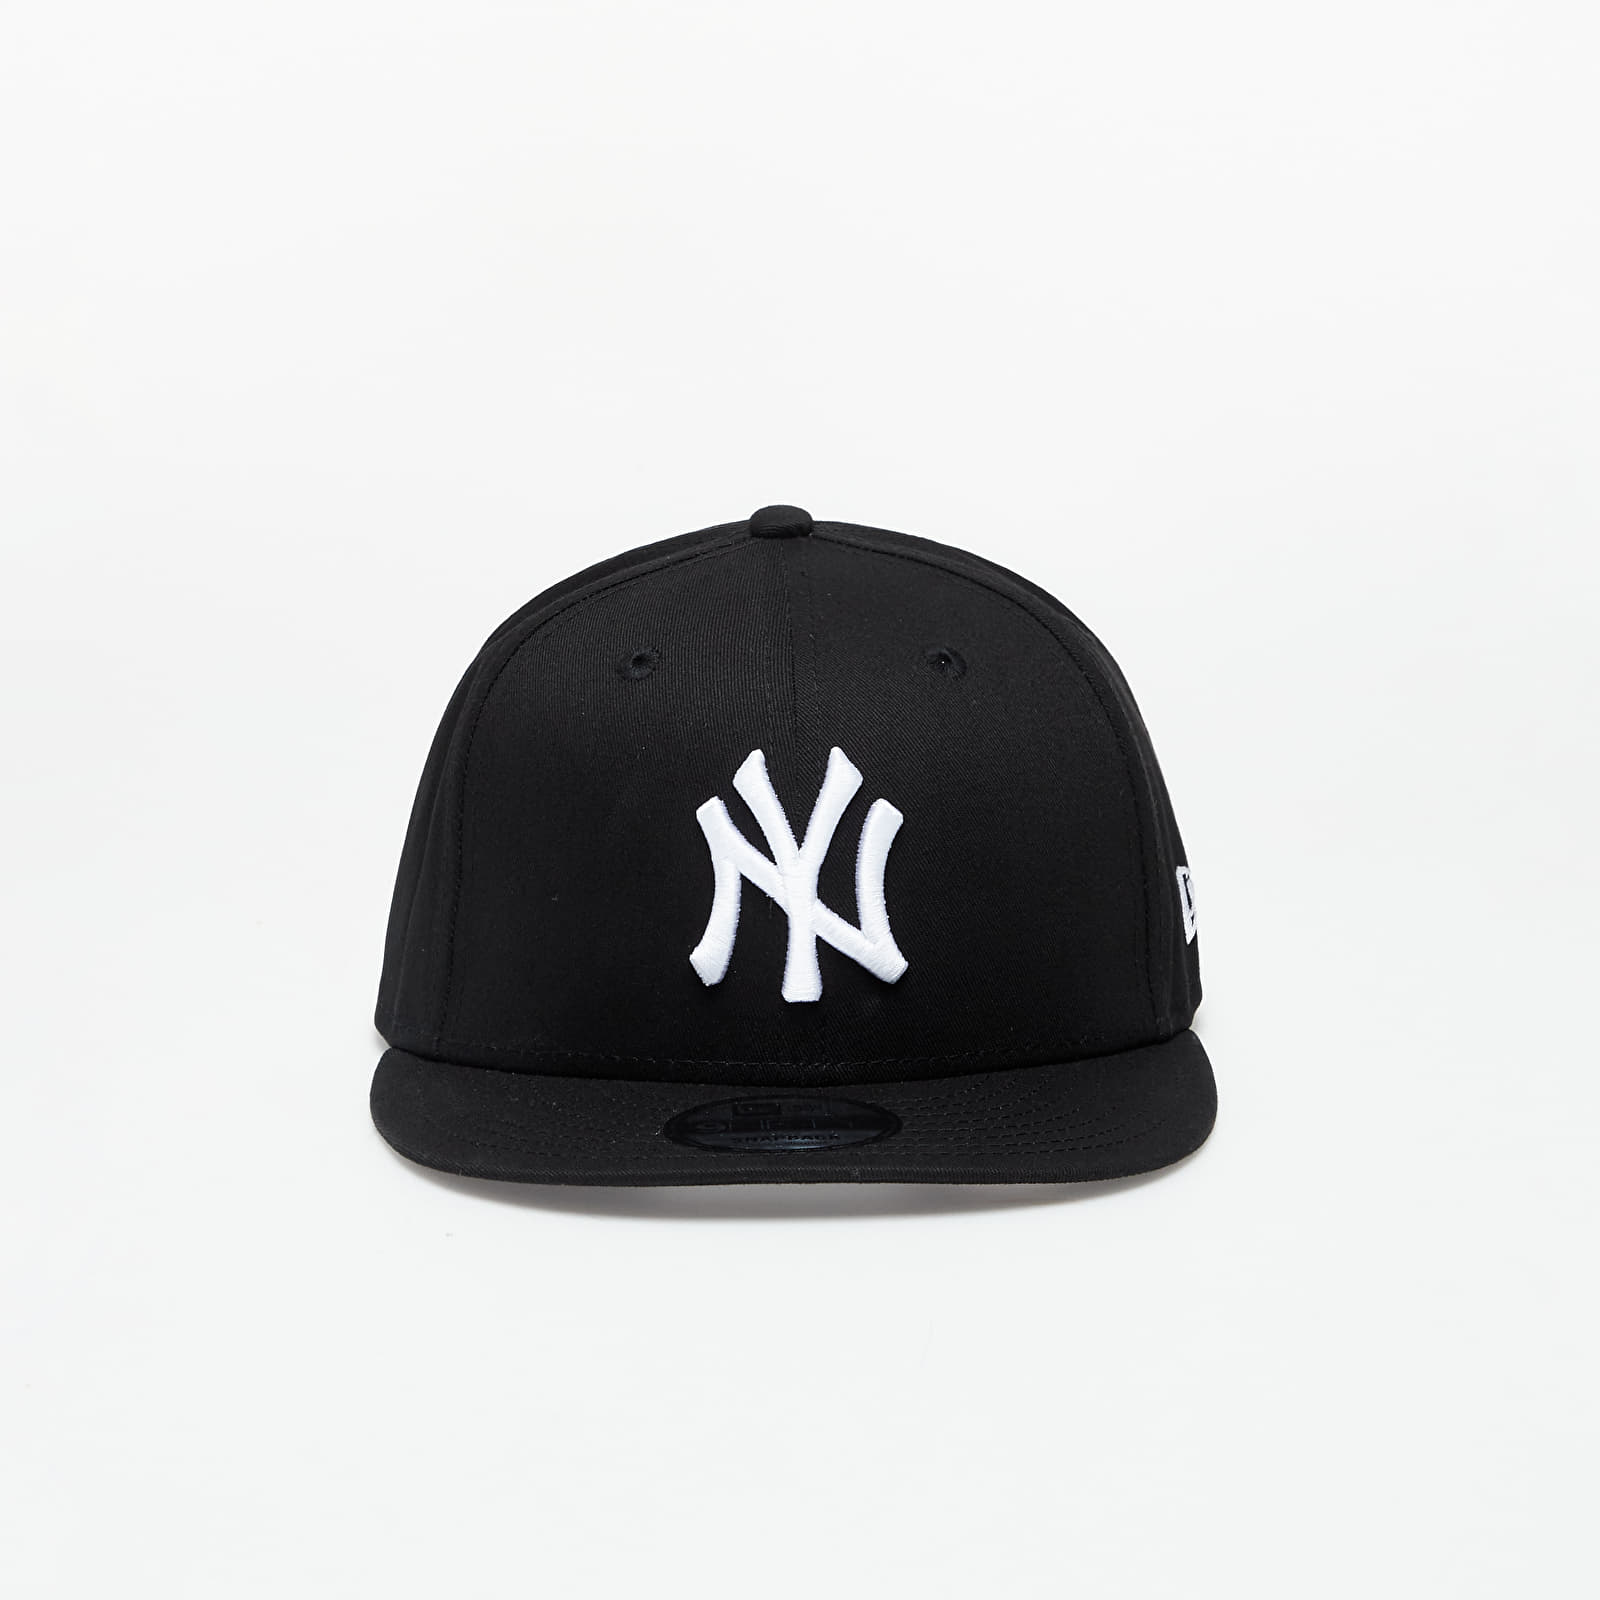 Caps New Era 9Fifty MLB New York Yankees Cap Black/ White